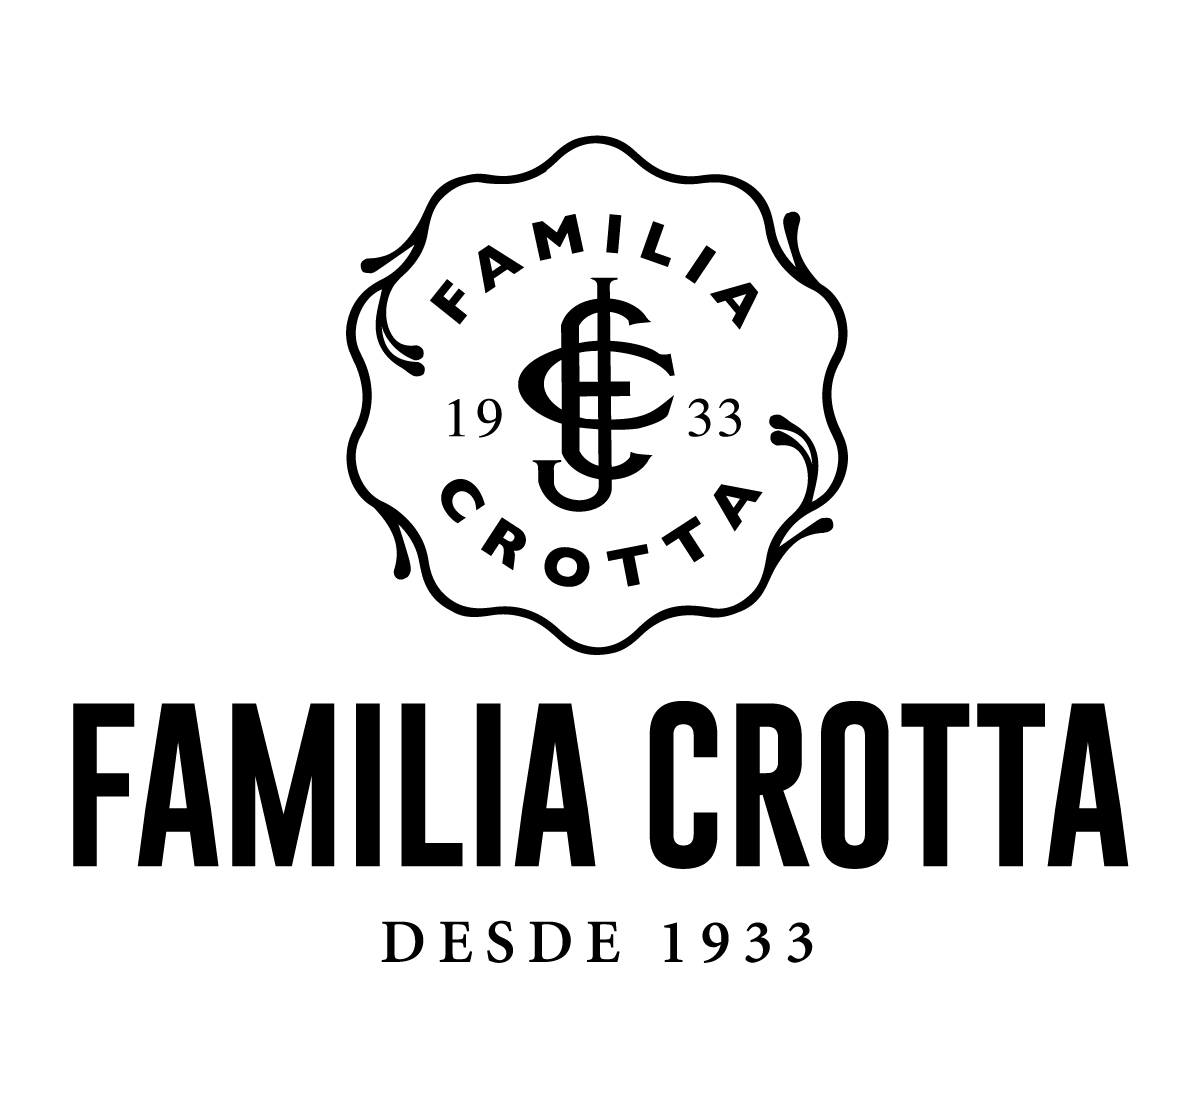 Familia Crotta